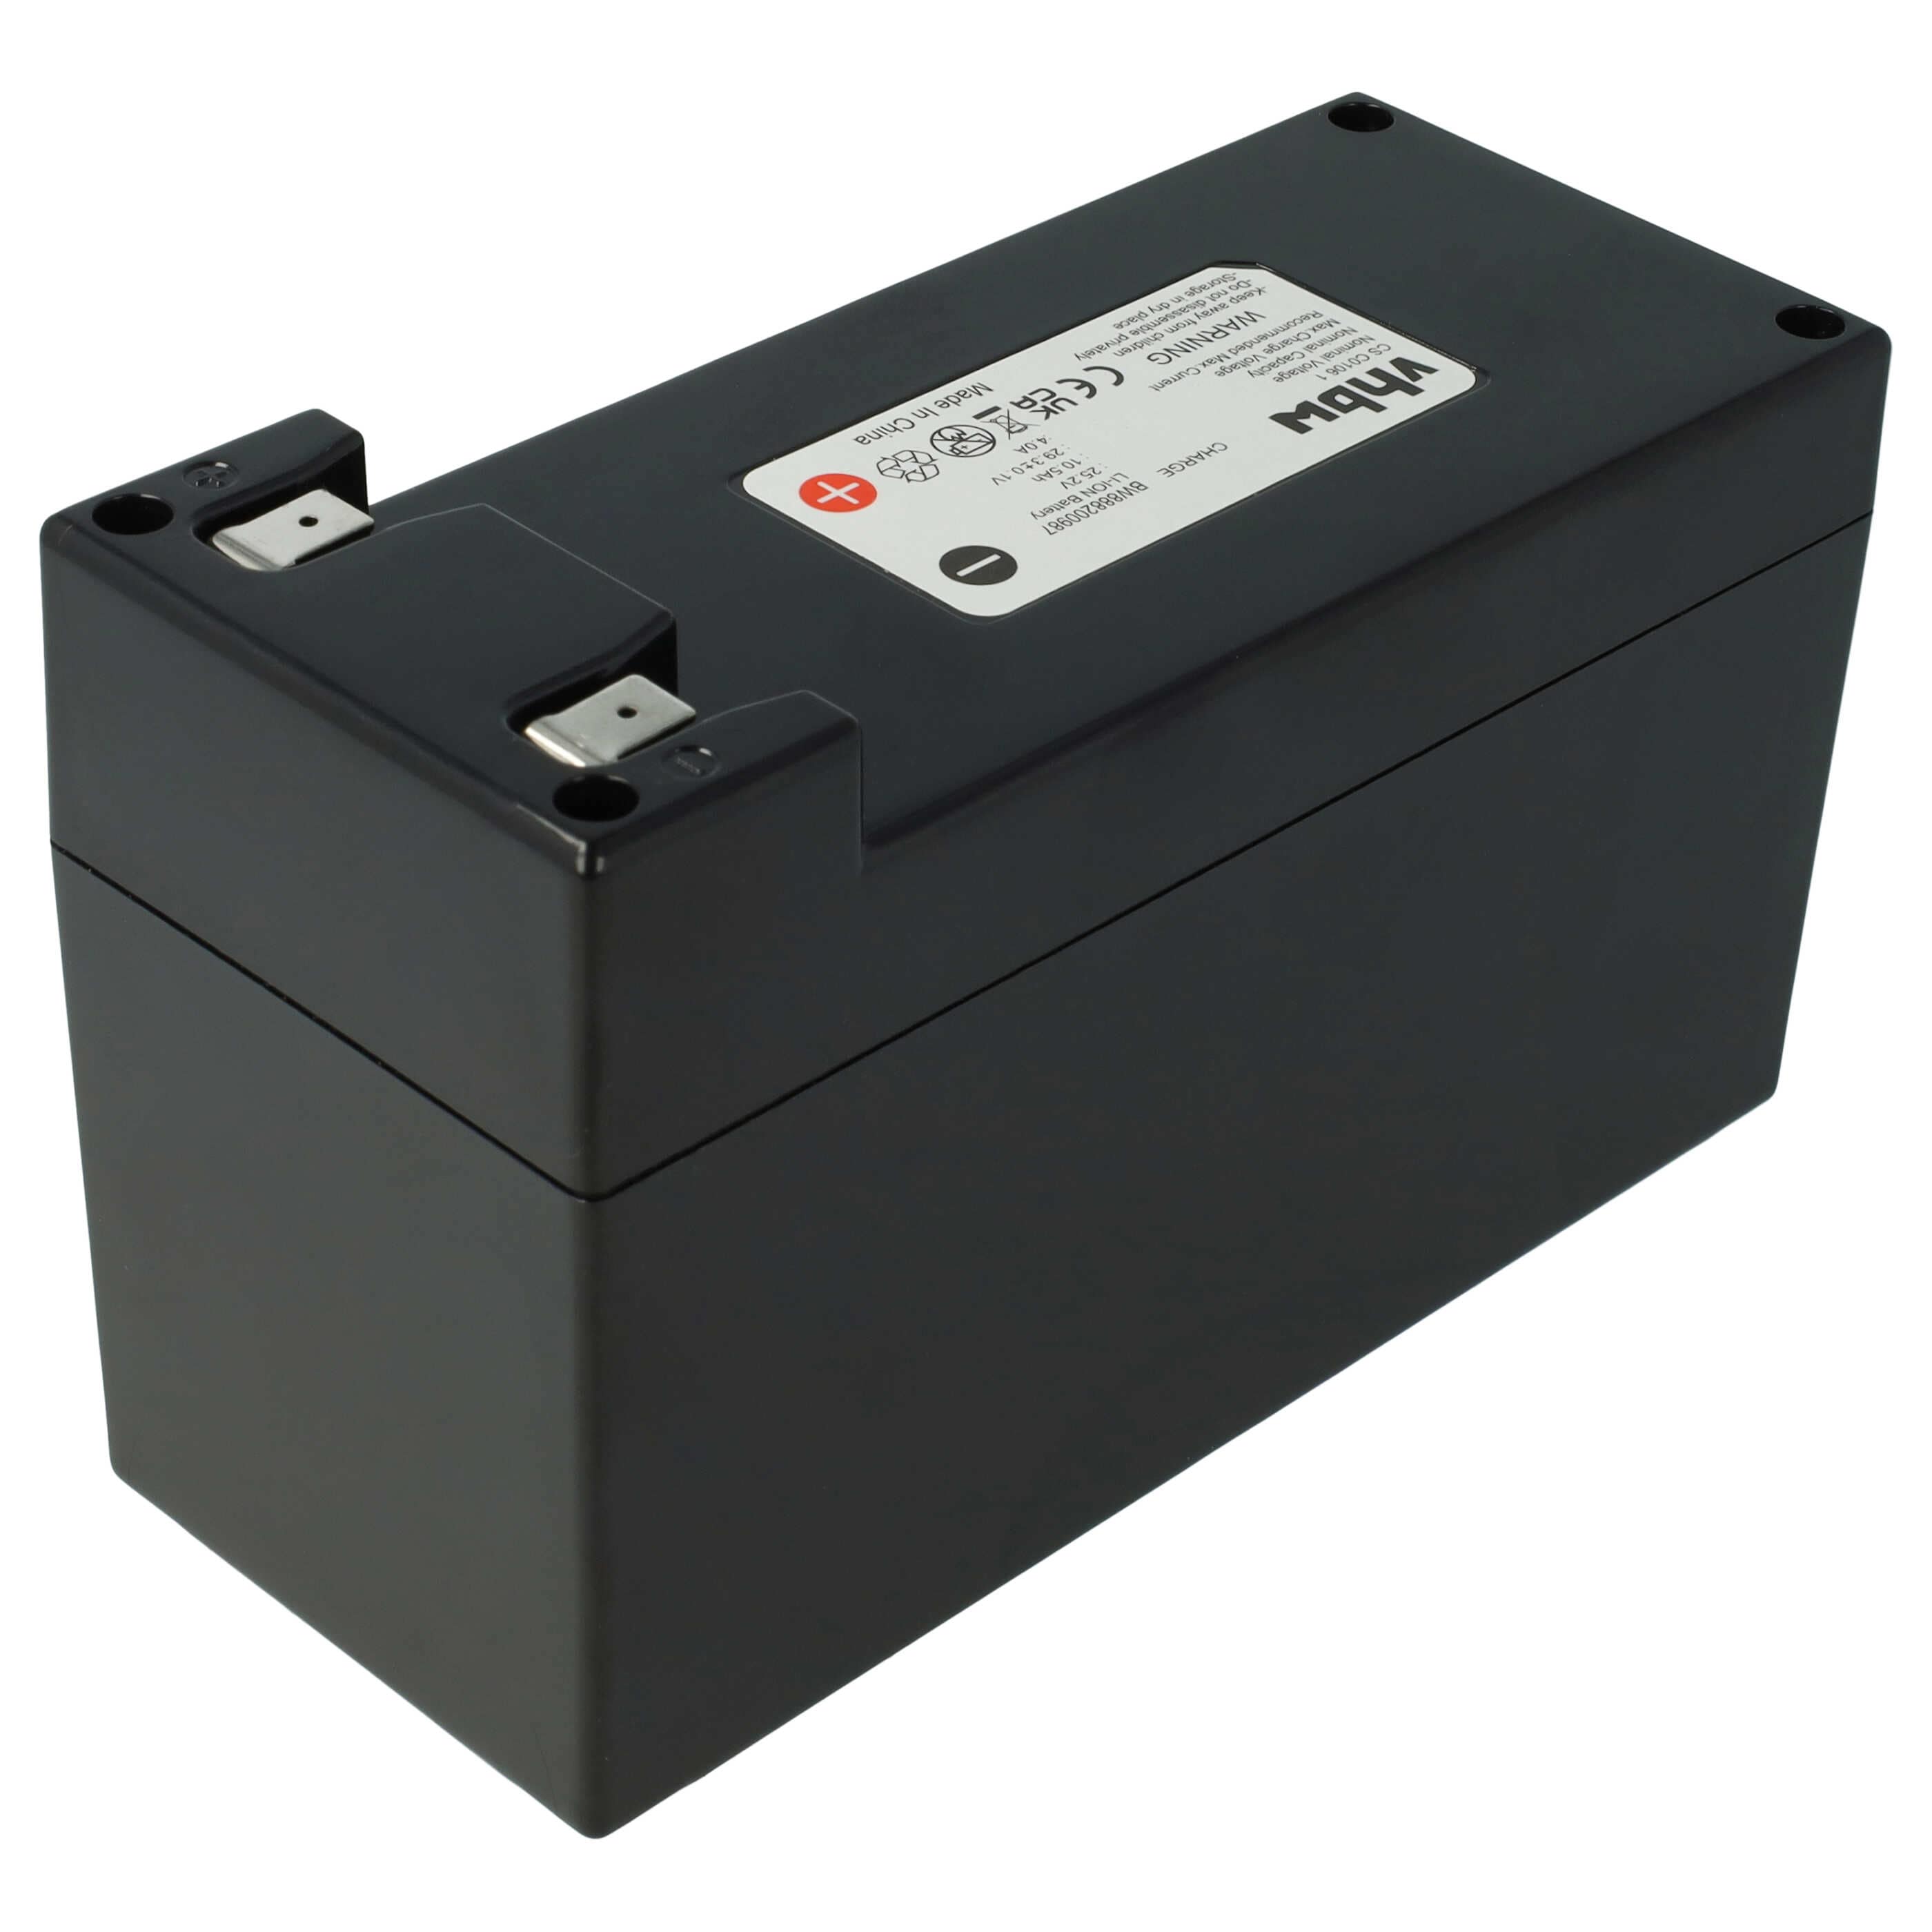 Lawnmower Battery Replacement for Stiga 1126-9138-01, 1126-9105-01 - 10200mAh 25.2V Li-Ion, black